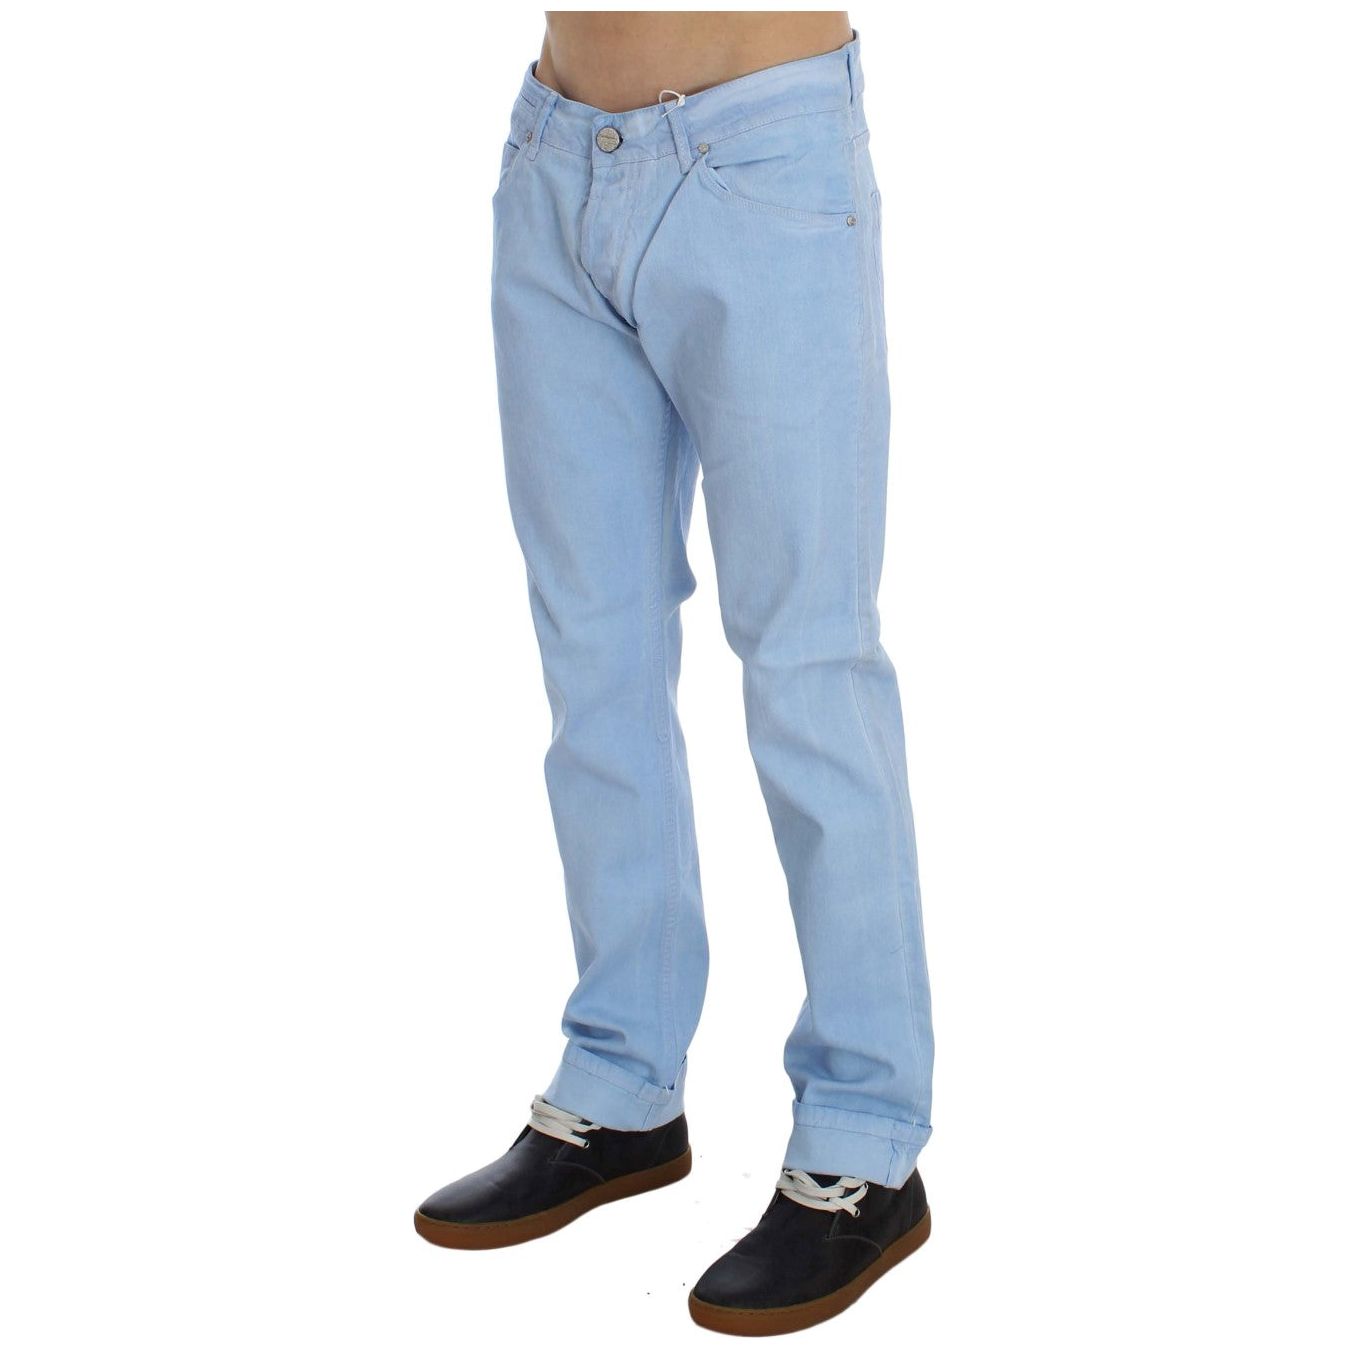 Acht Elegant Low Waist Regular Fit Men's Jeans blue-cotton-stretch-low-waist-fit-jeans 299172-blue-cotton-stretch-low-waist-fit-jeans-2.jpg